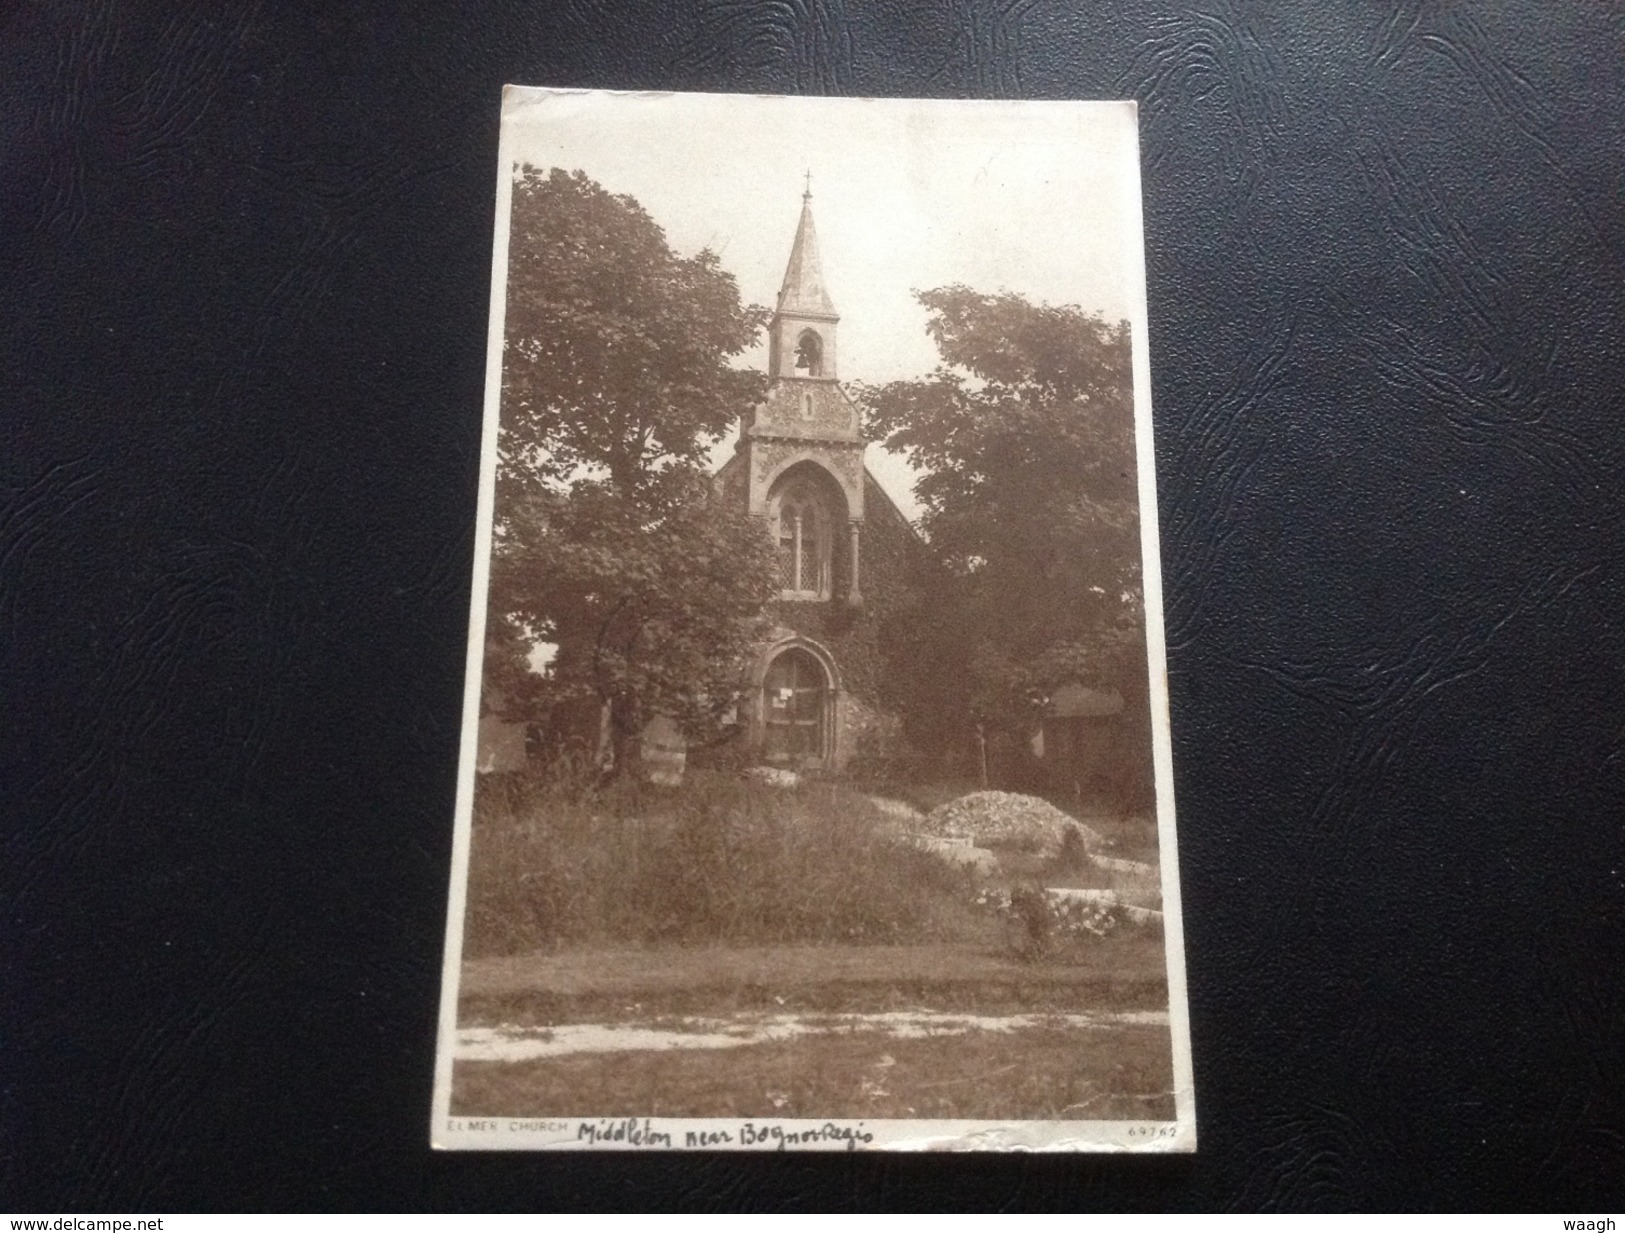 ELMER CHURCH Middleton Near Bignor Regis - 1932 Timbrée - Bognor Regis